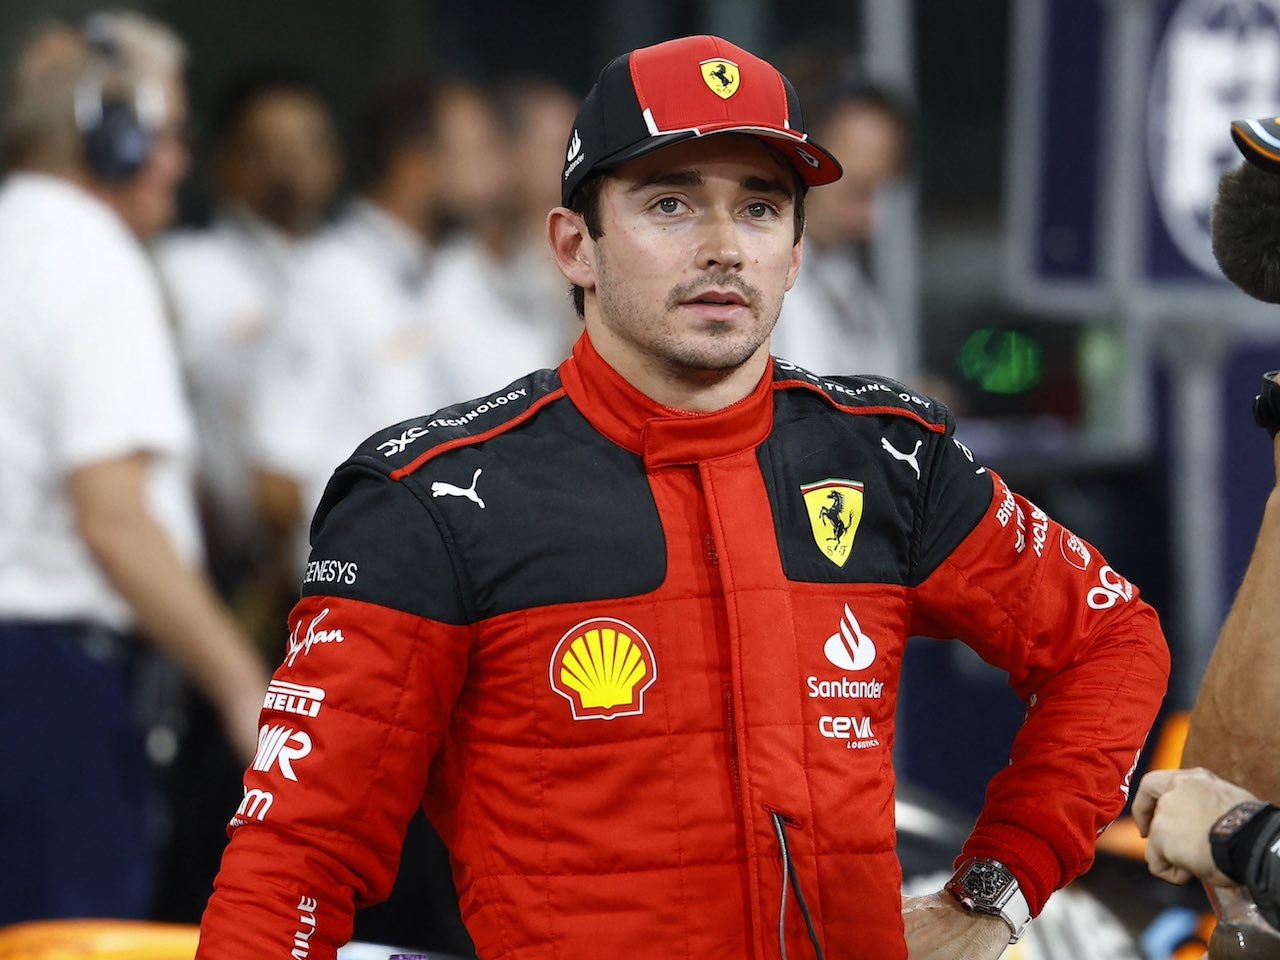 Long-term Leclerc deal 'positive' for Ferrari, says Minardi